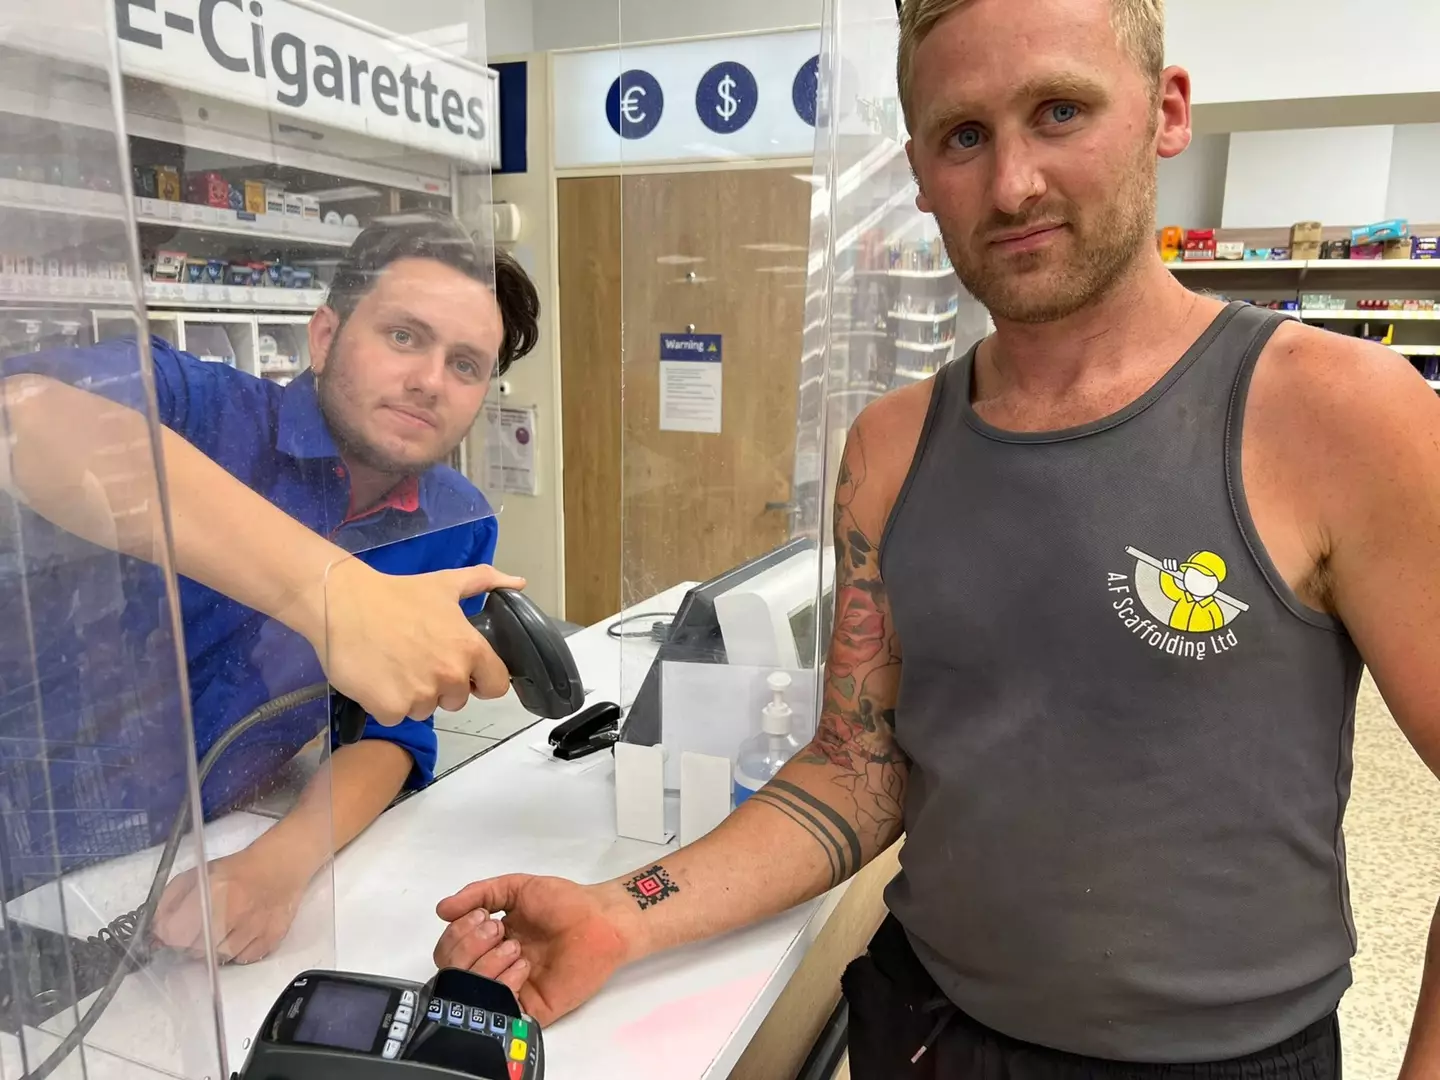 Dean Mayhew spent £200 for a permanent tattoo of his Tesco Club Card QR code.